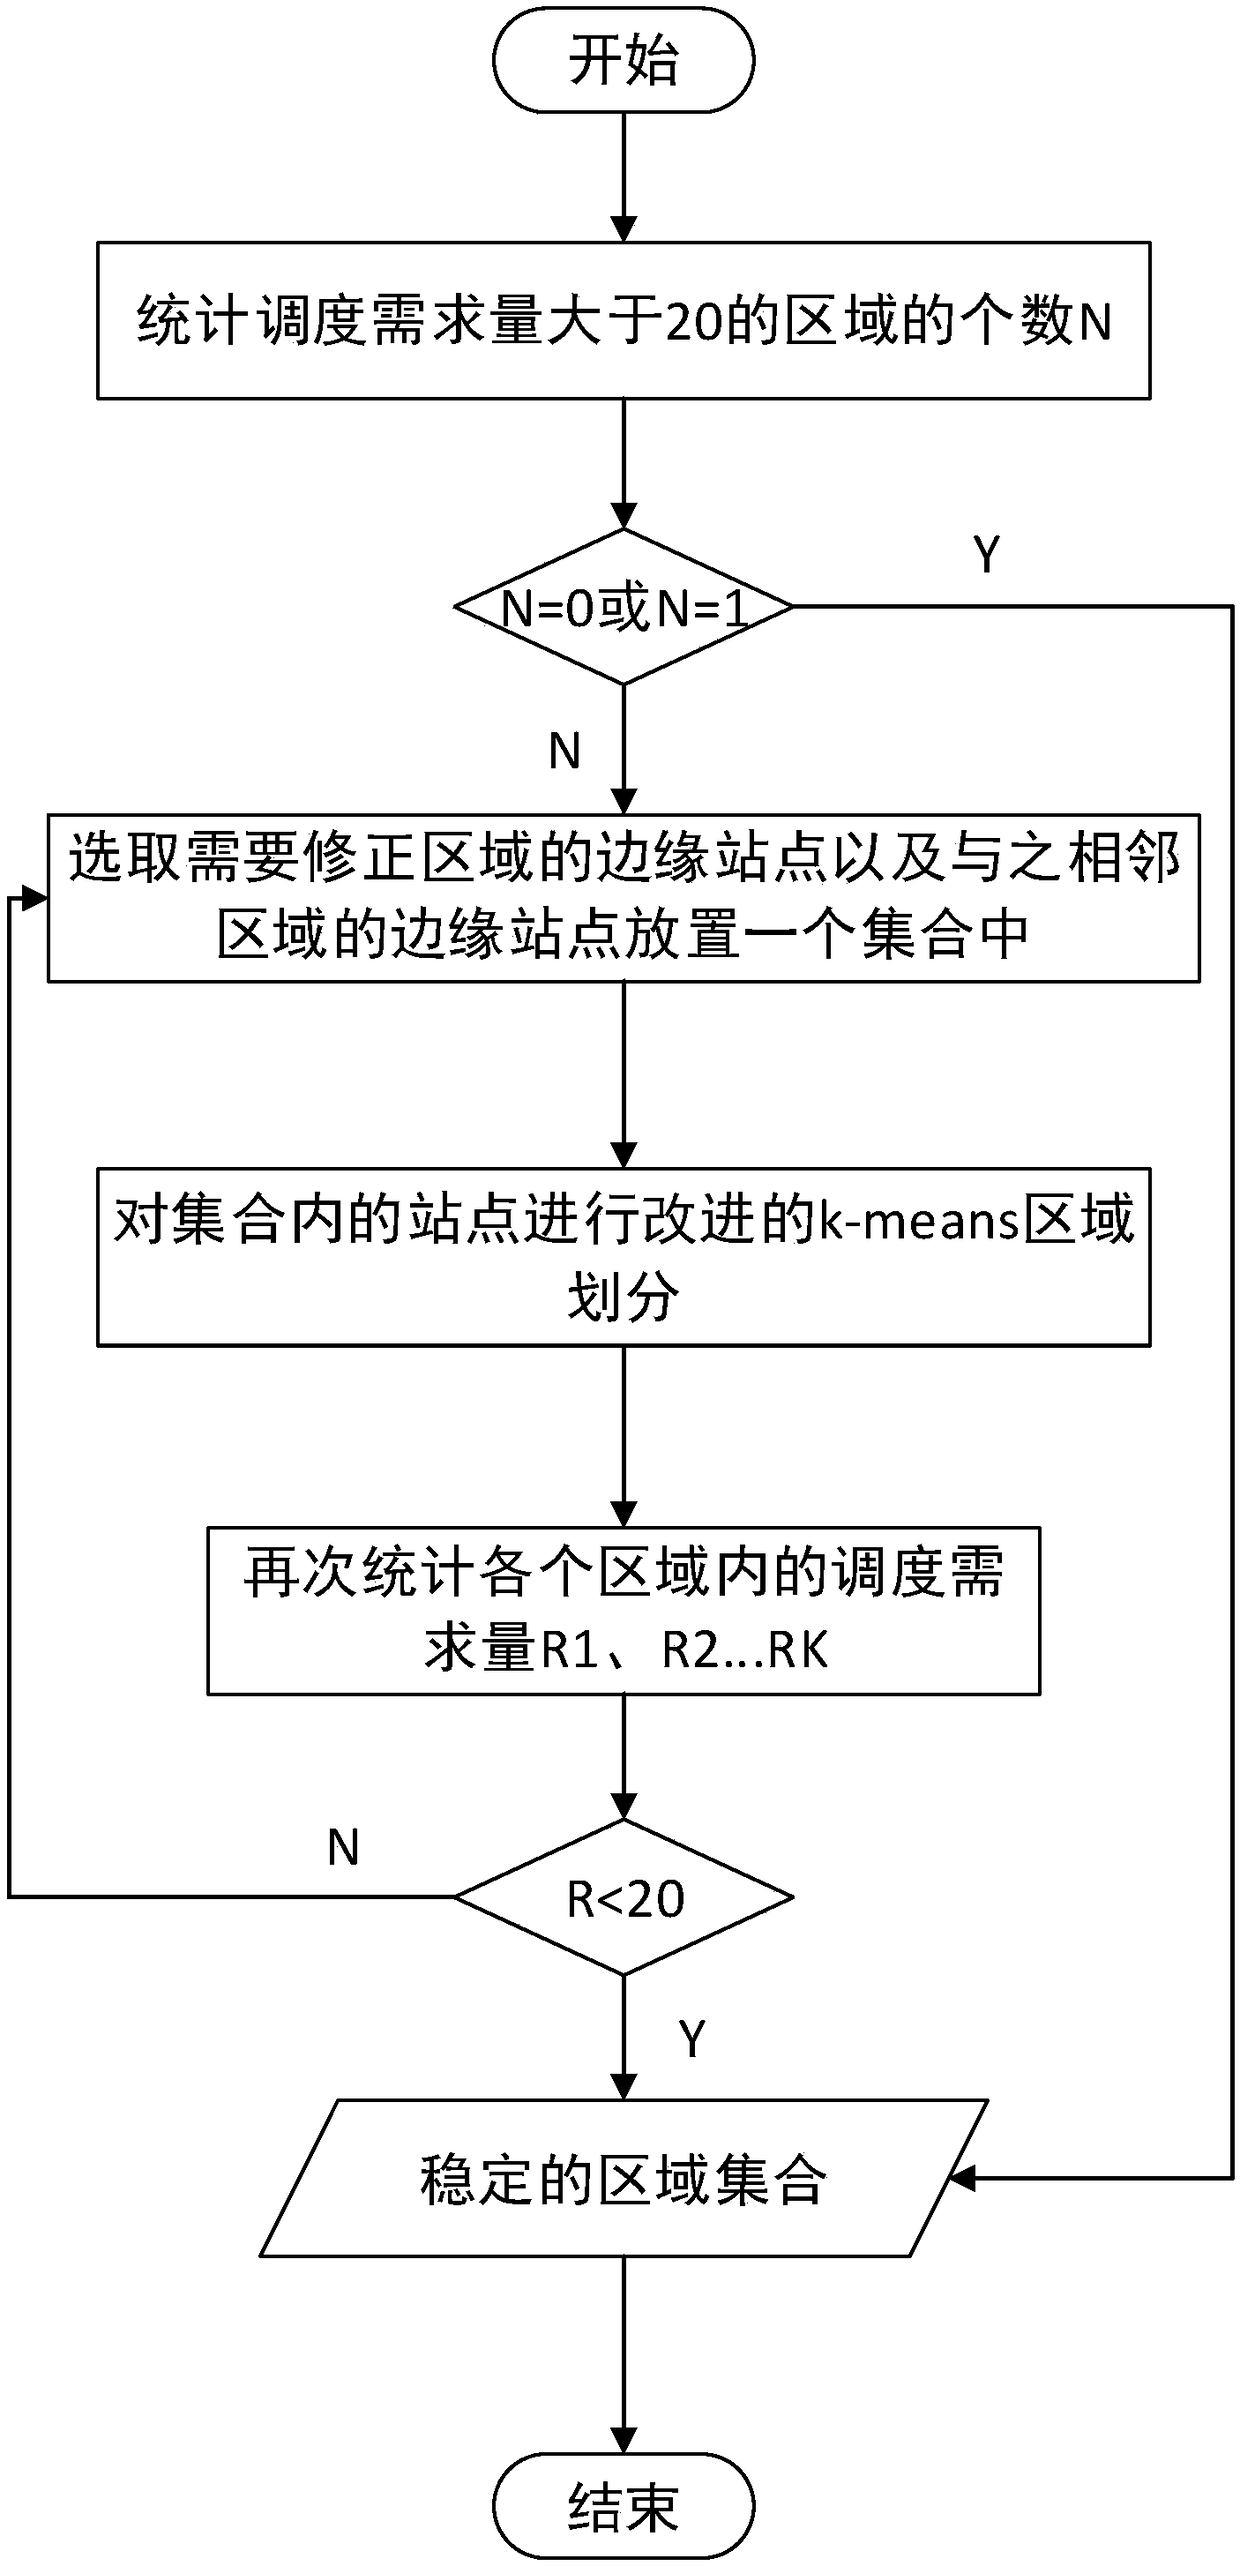 K-means algorithm-based intelligent public bike dispatching system area division method